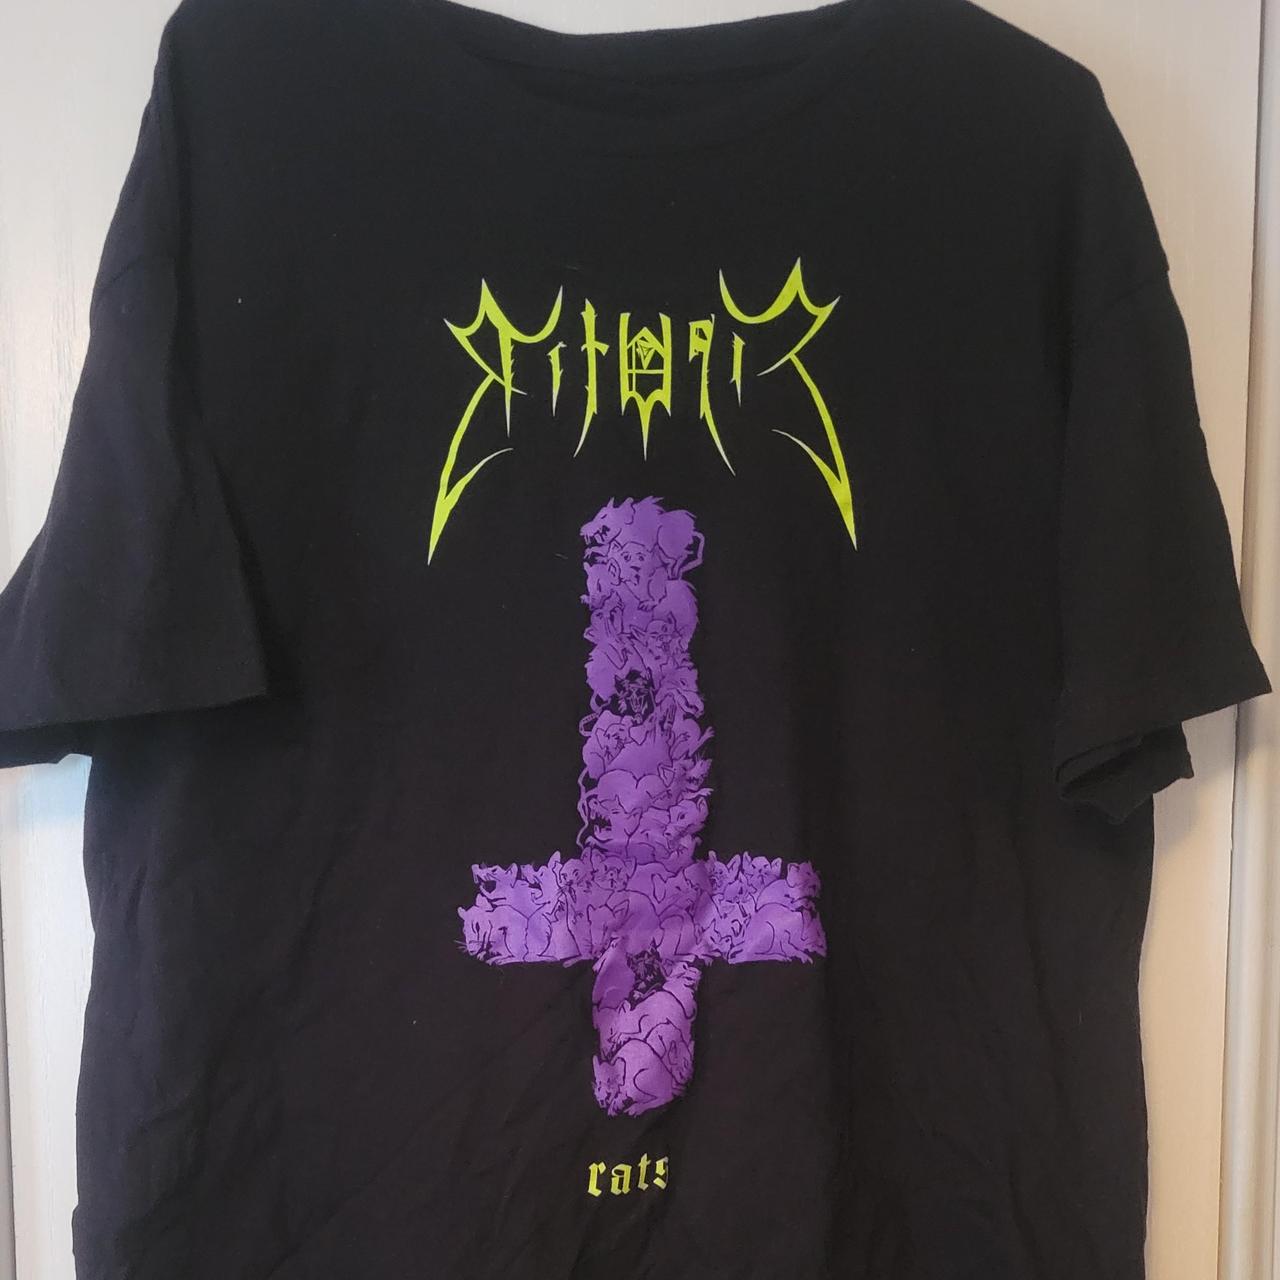 Product Image 1 - Ritualz shirt LARGE worn once.